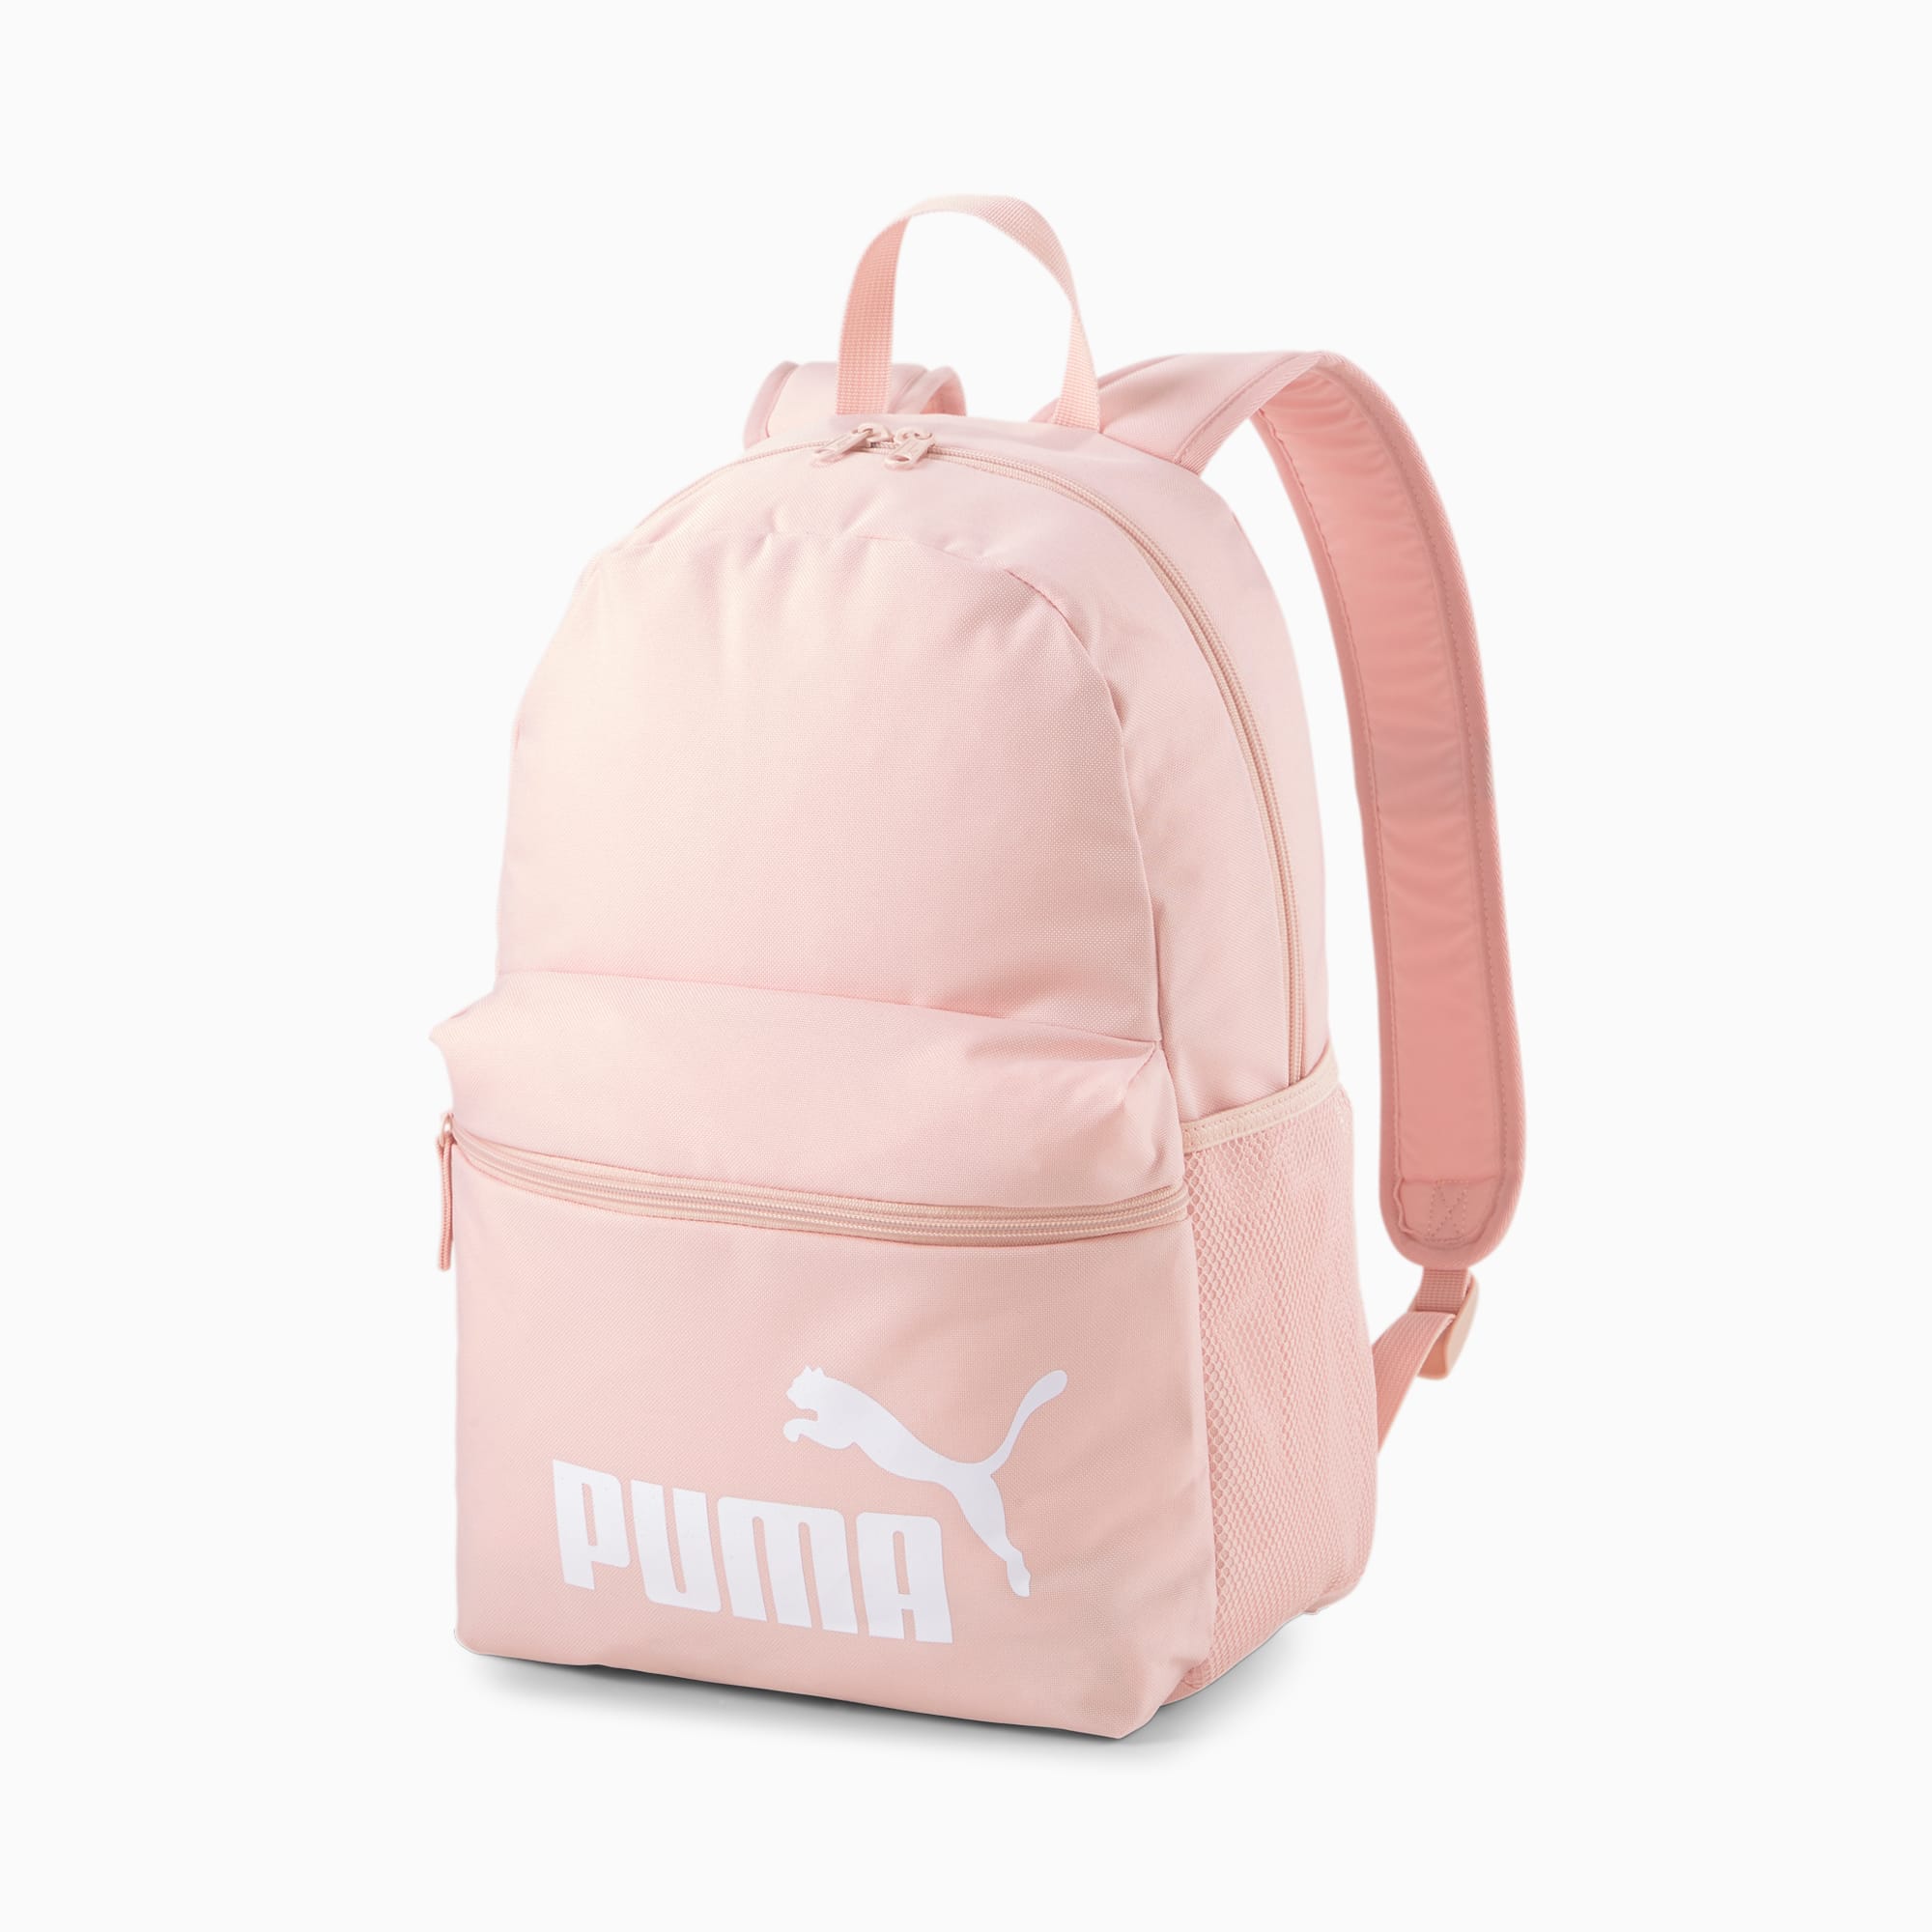 Backpack PUMA Phase Backpack 075487 49 Puma Black Golden Logo, UhfmrShops